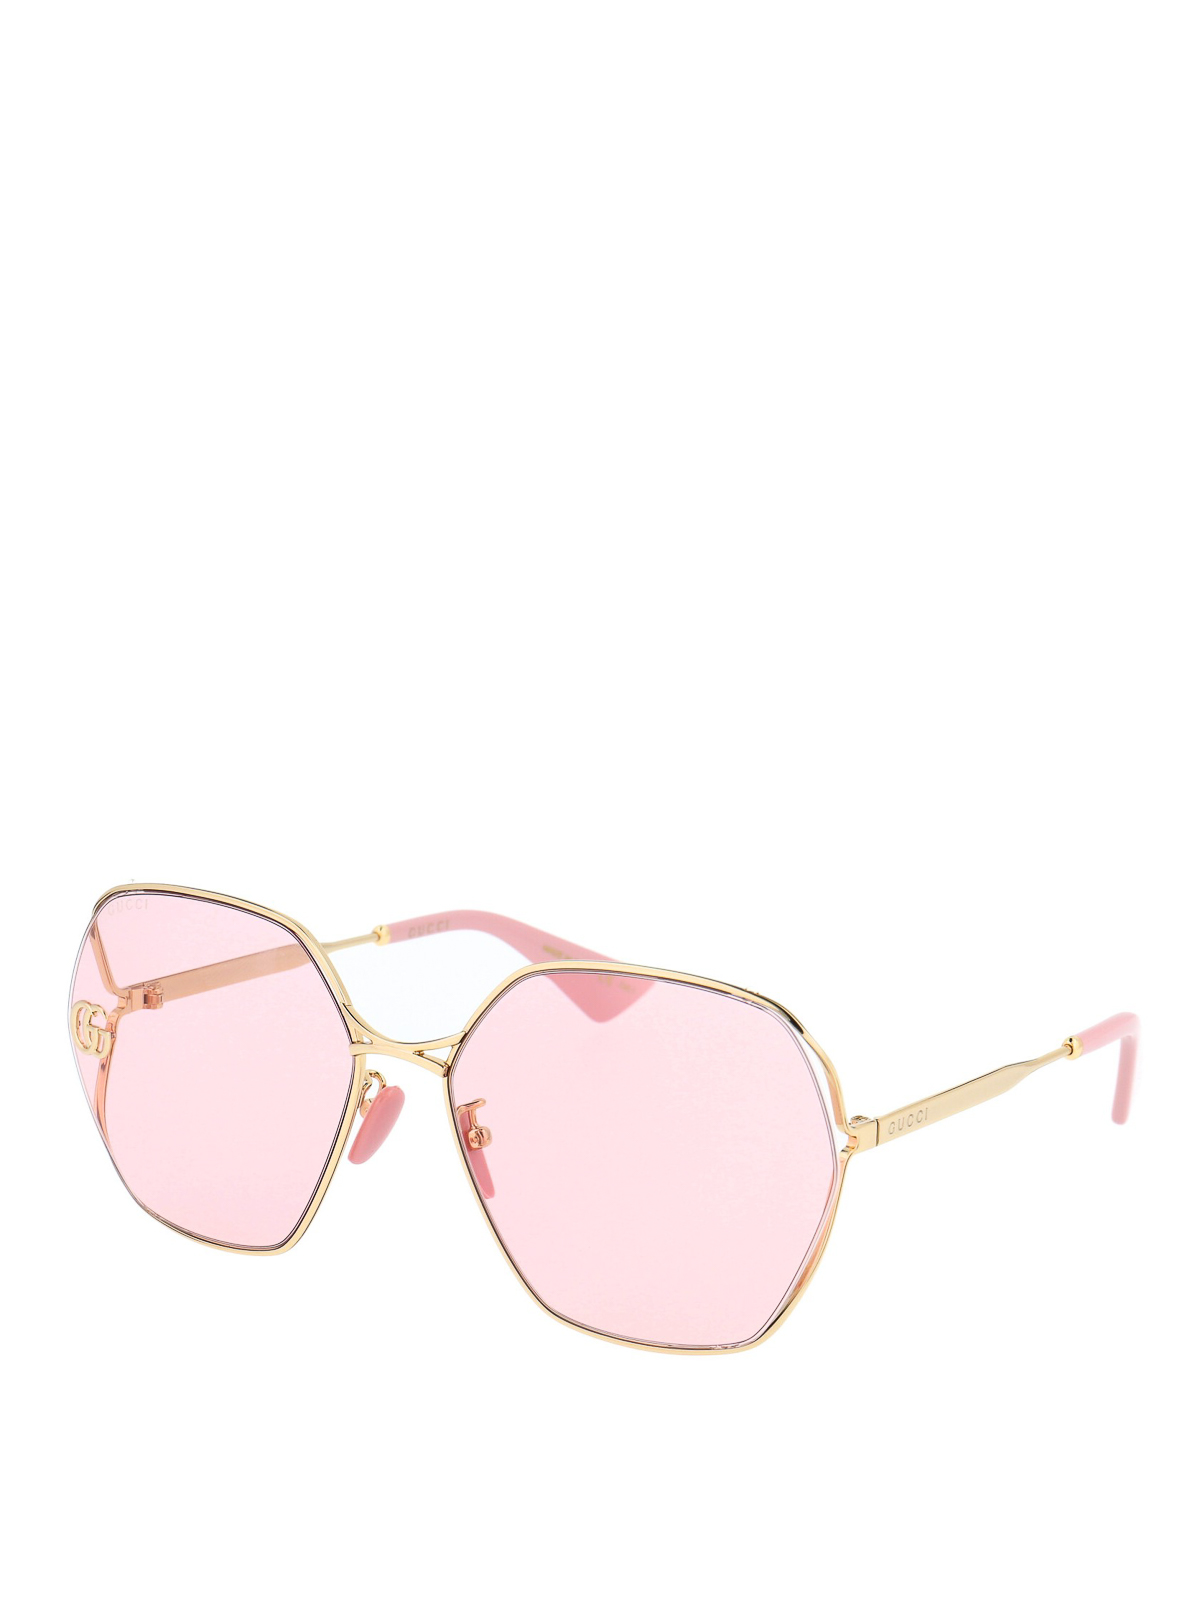 Gucci Pink Lens Sunglasses | vlr.eng.br